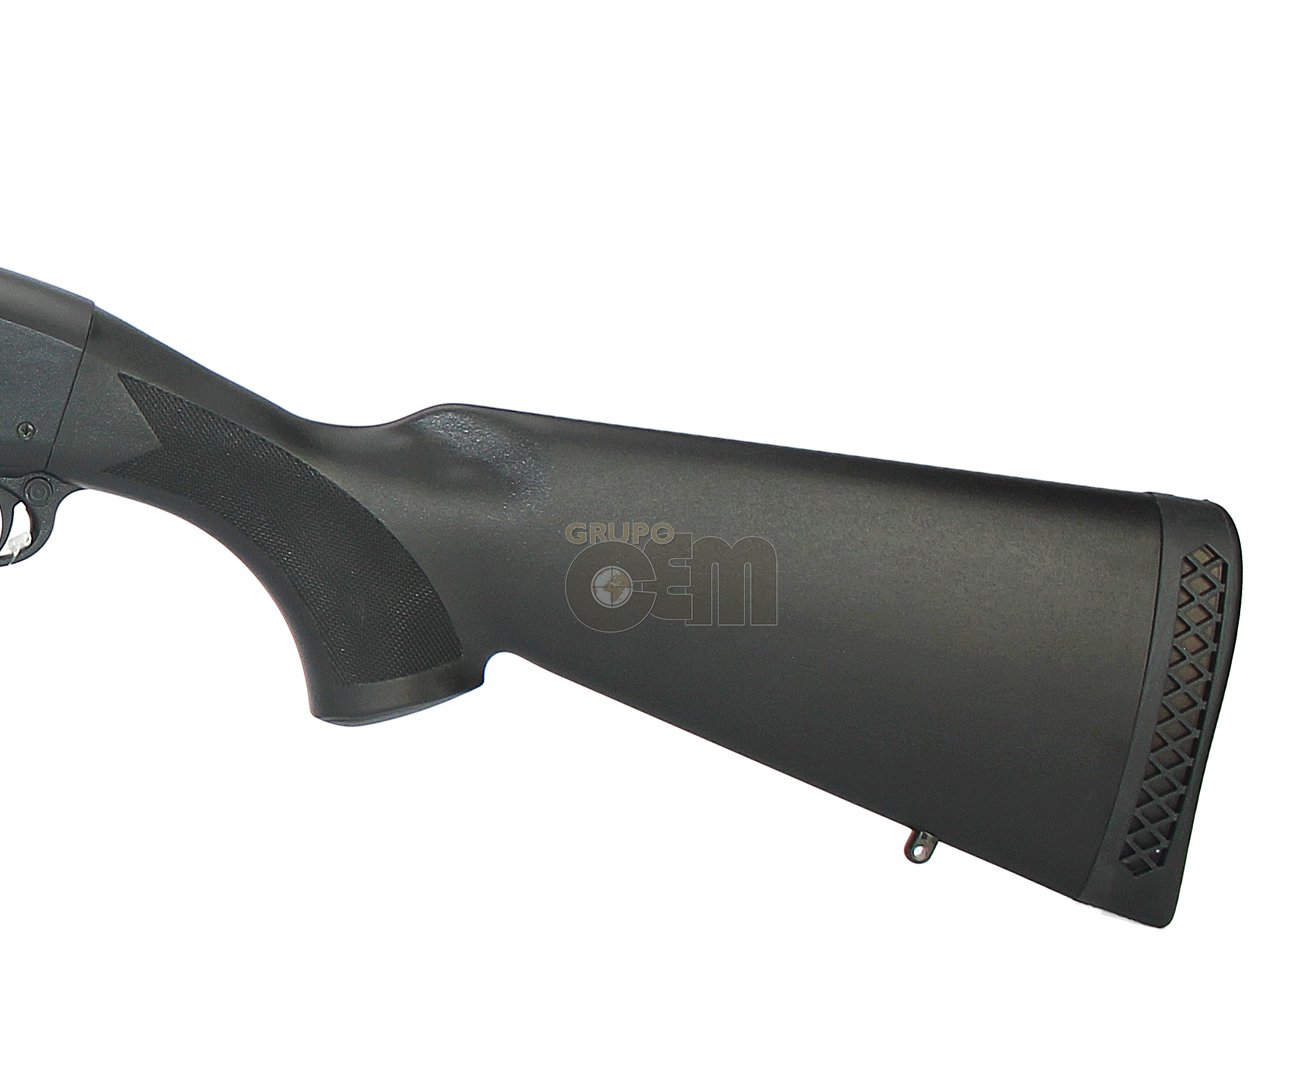 Shotgun / Escopeta De Airsoft Shotgun M870 - Cm350 6mm - Cyma